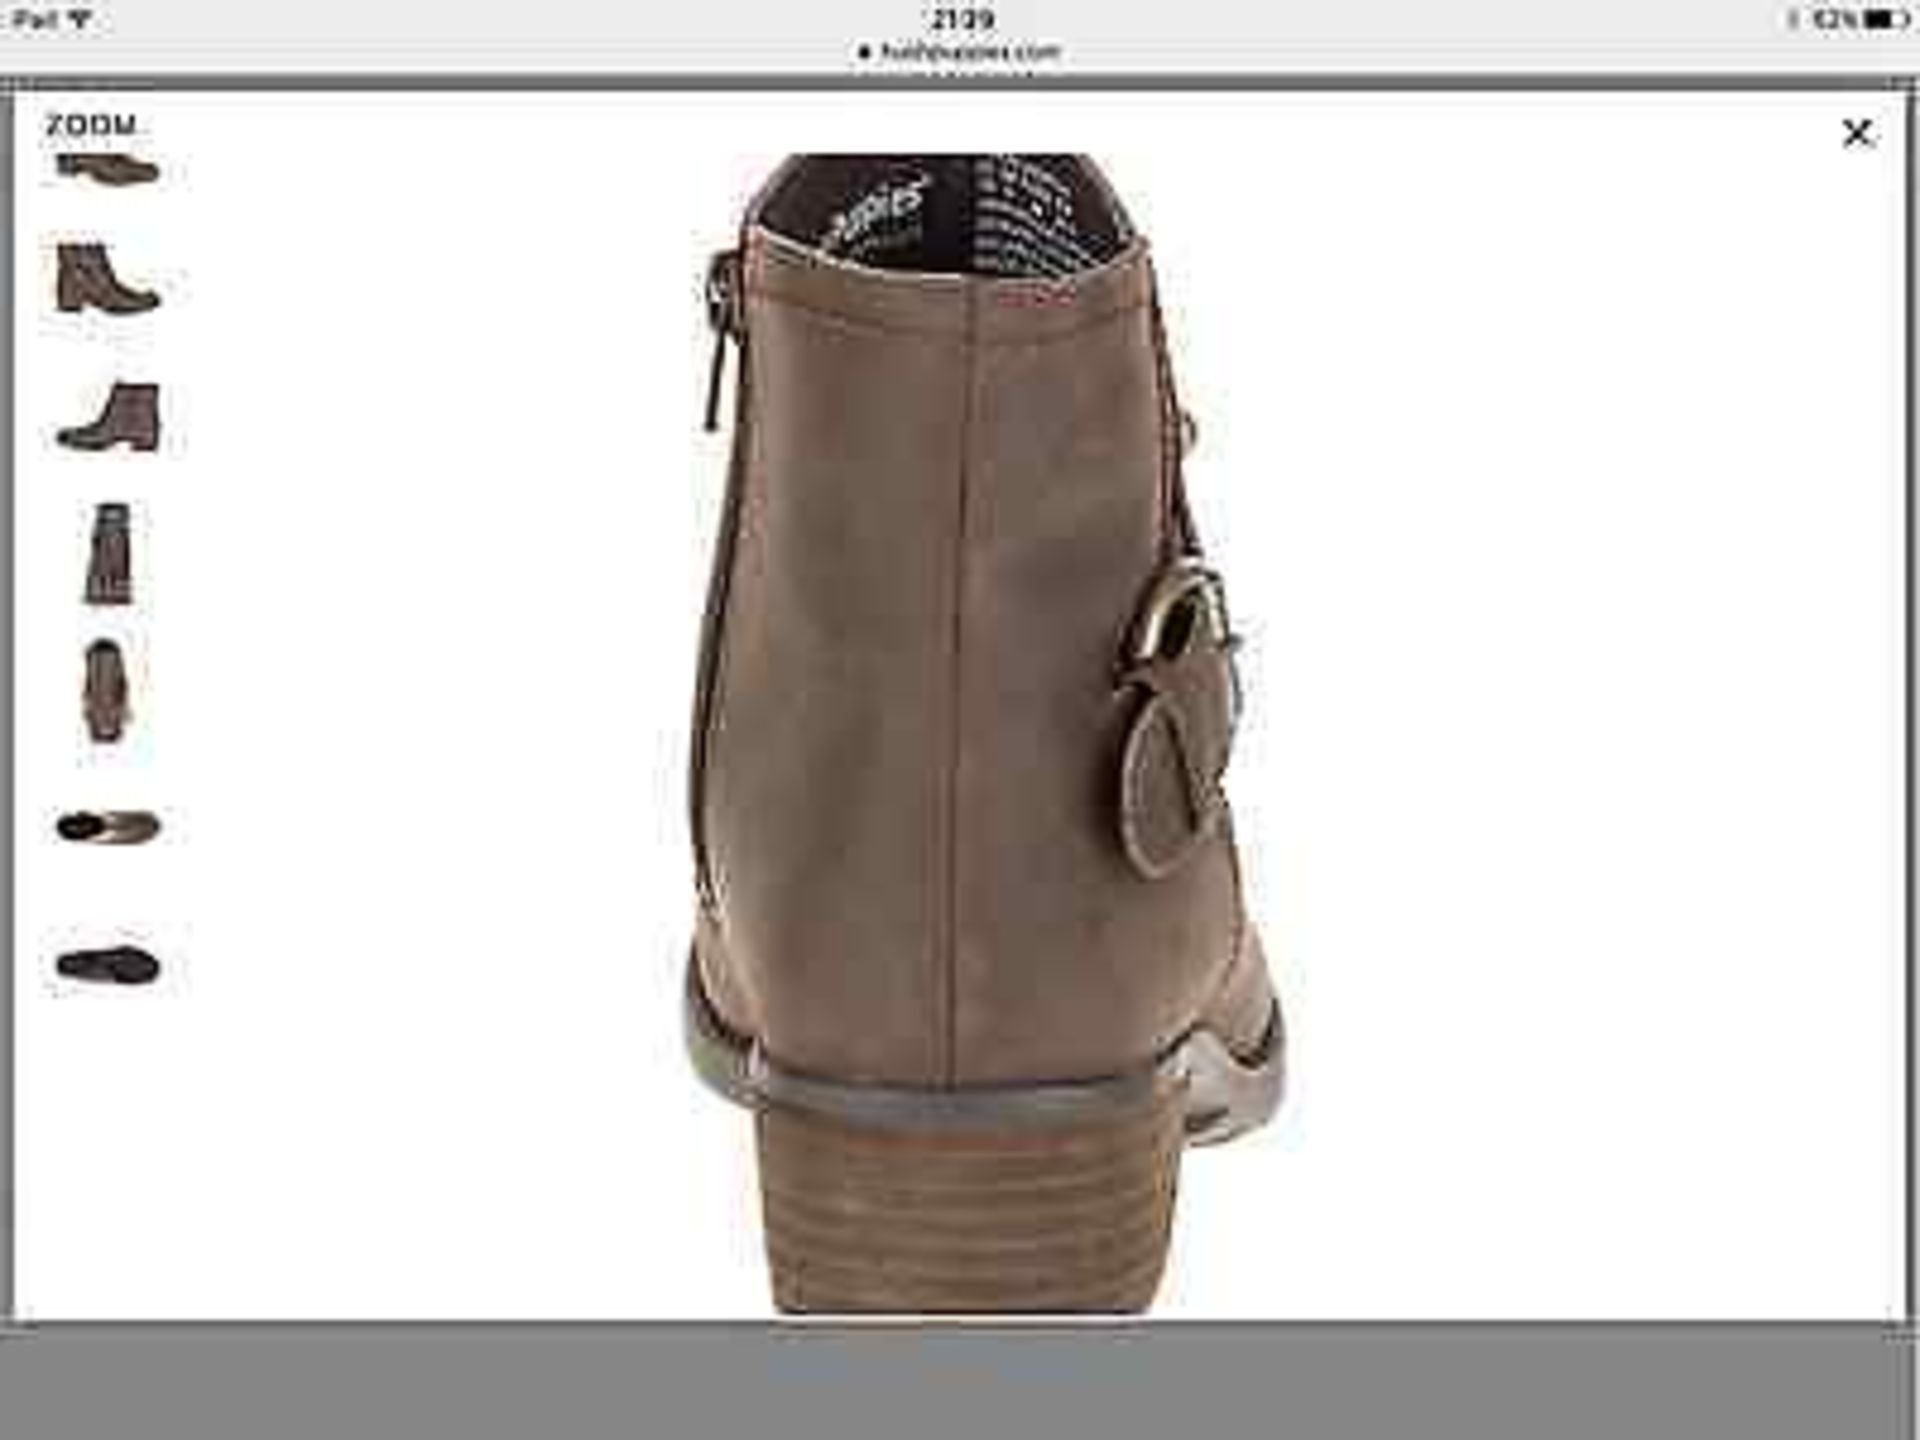 Hush Puppies Dark Brown Proud Overton Nubuck Boot, Size UK 5, RRP $130 (New with box) [Ref: ] - Image 7 of 9